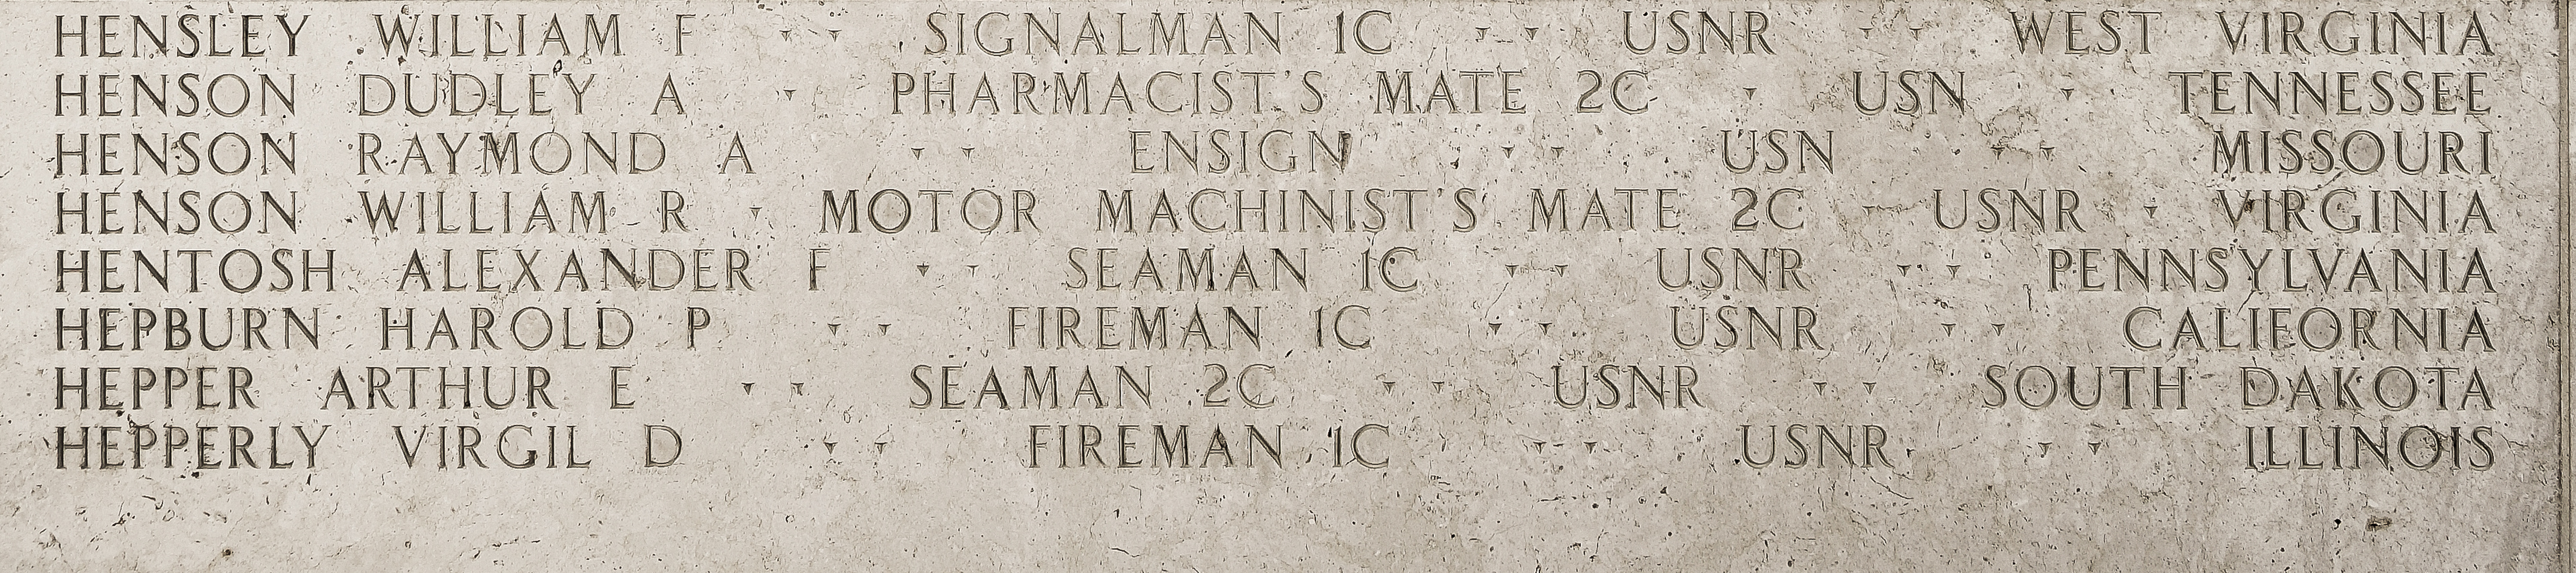 William F. Hensley, Signalman First Class